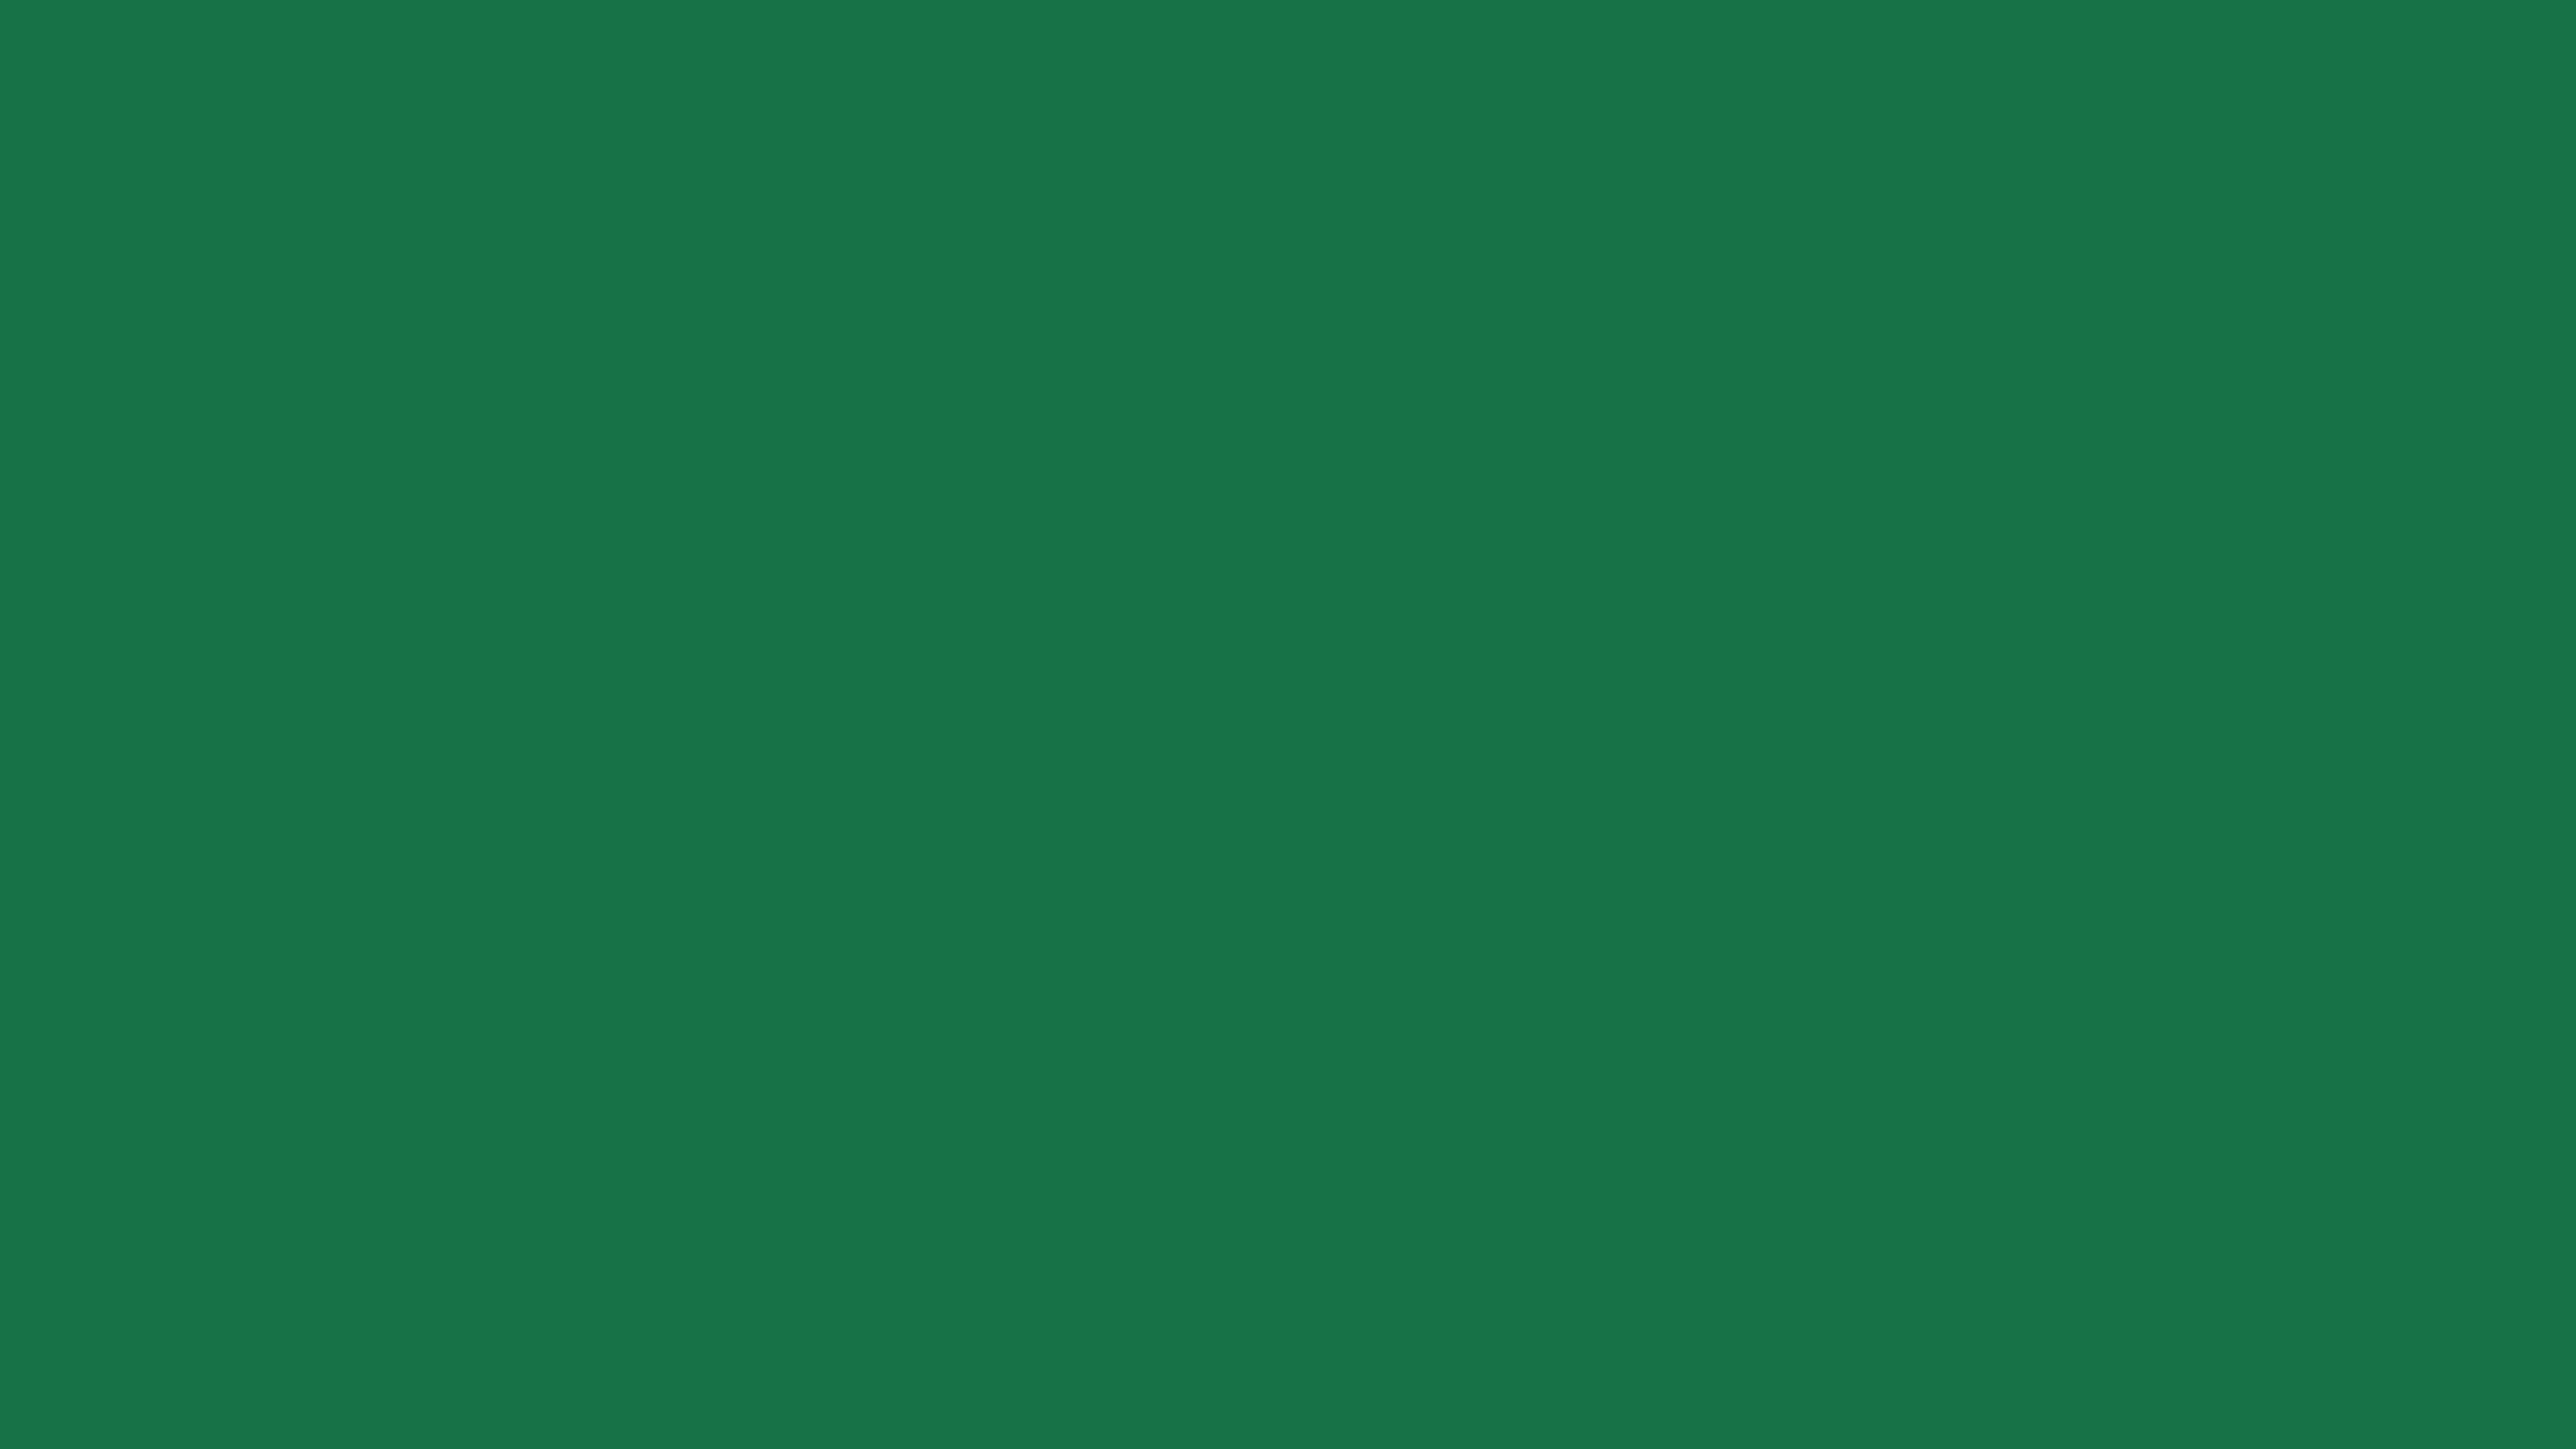 7680x4320 Dark Spring Green Solid Color Background